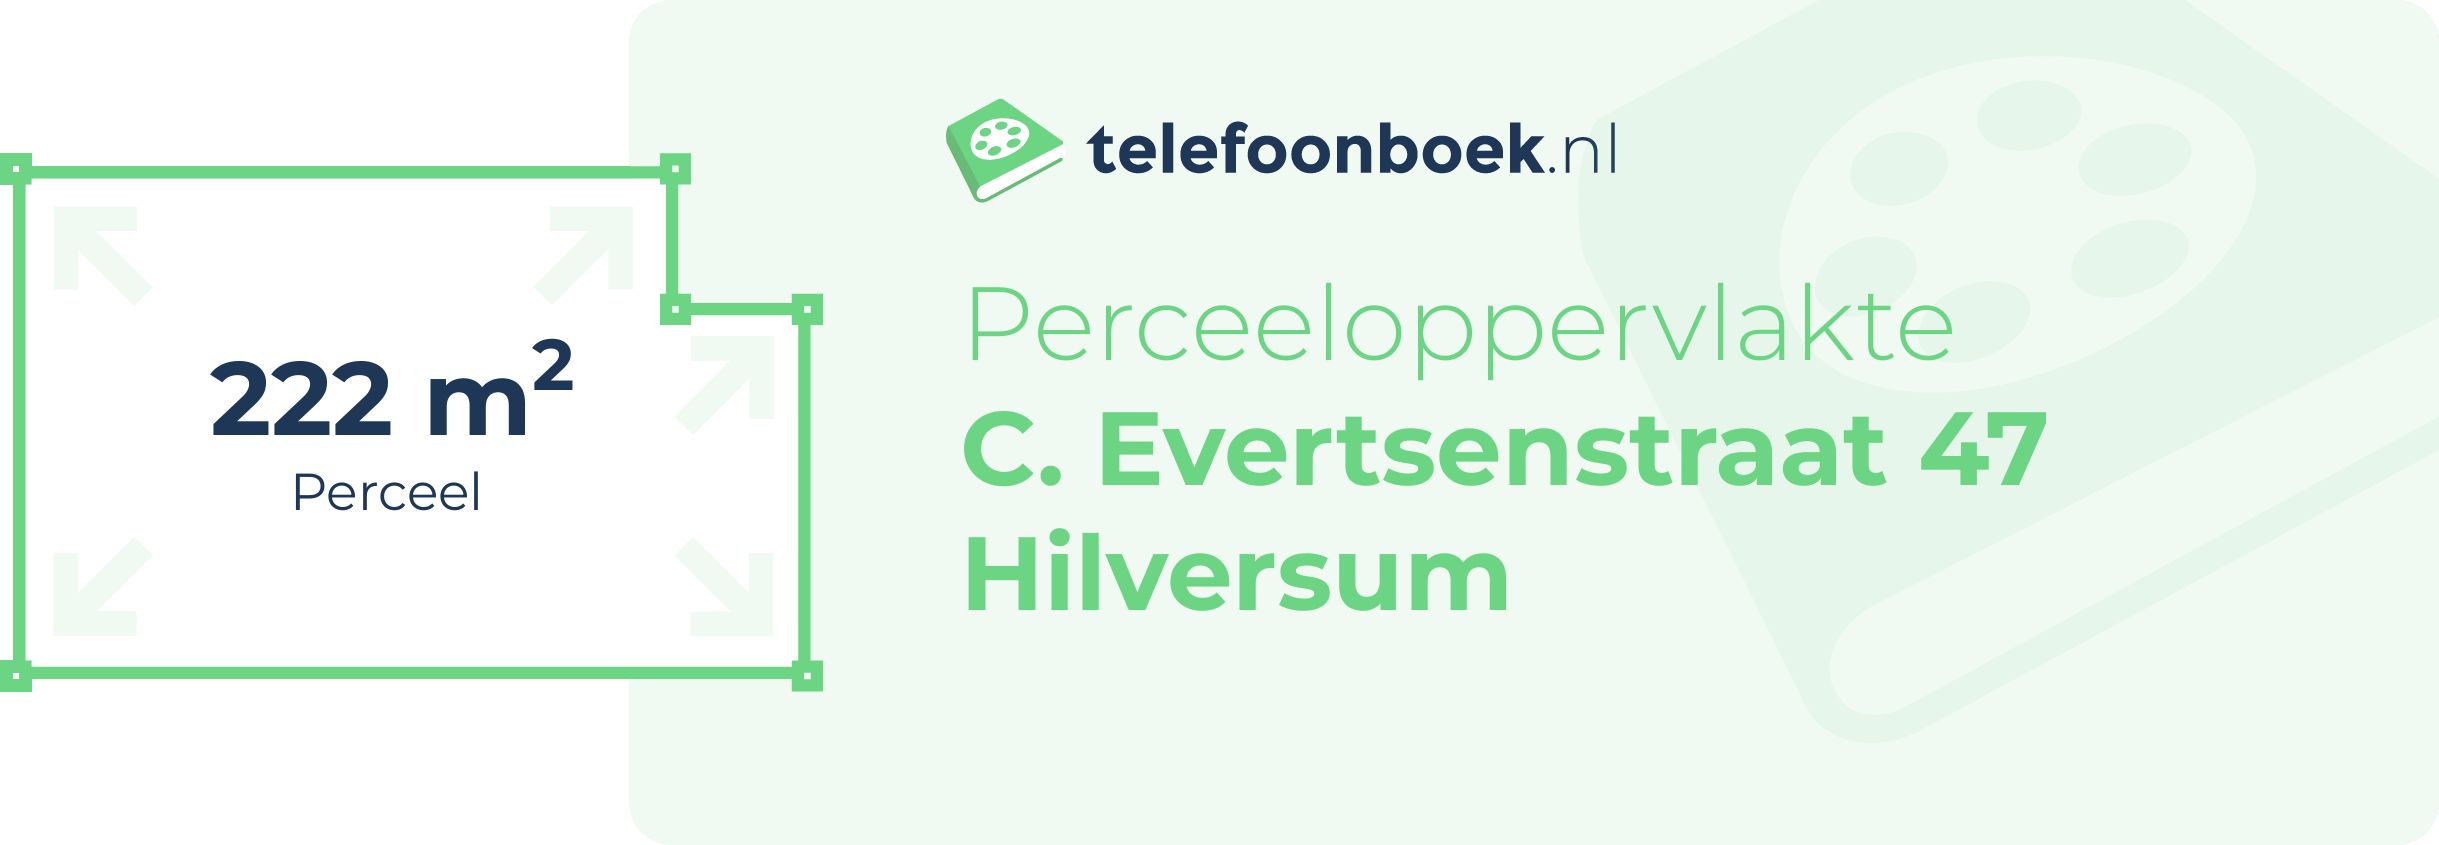 Perceeloppervlakte C. Evertsenstraat 47 Hilversum